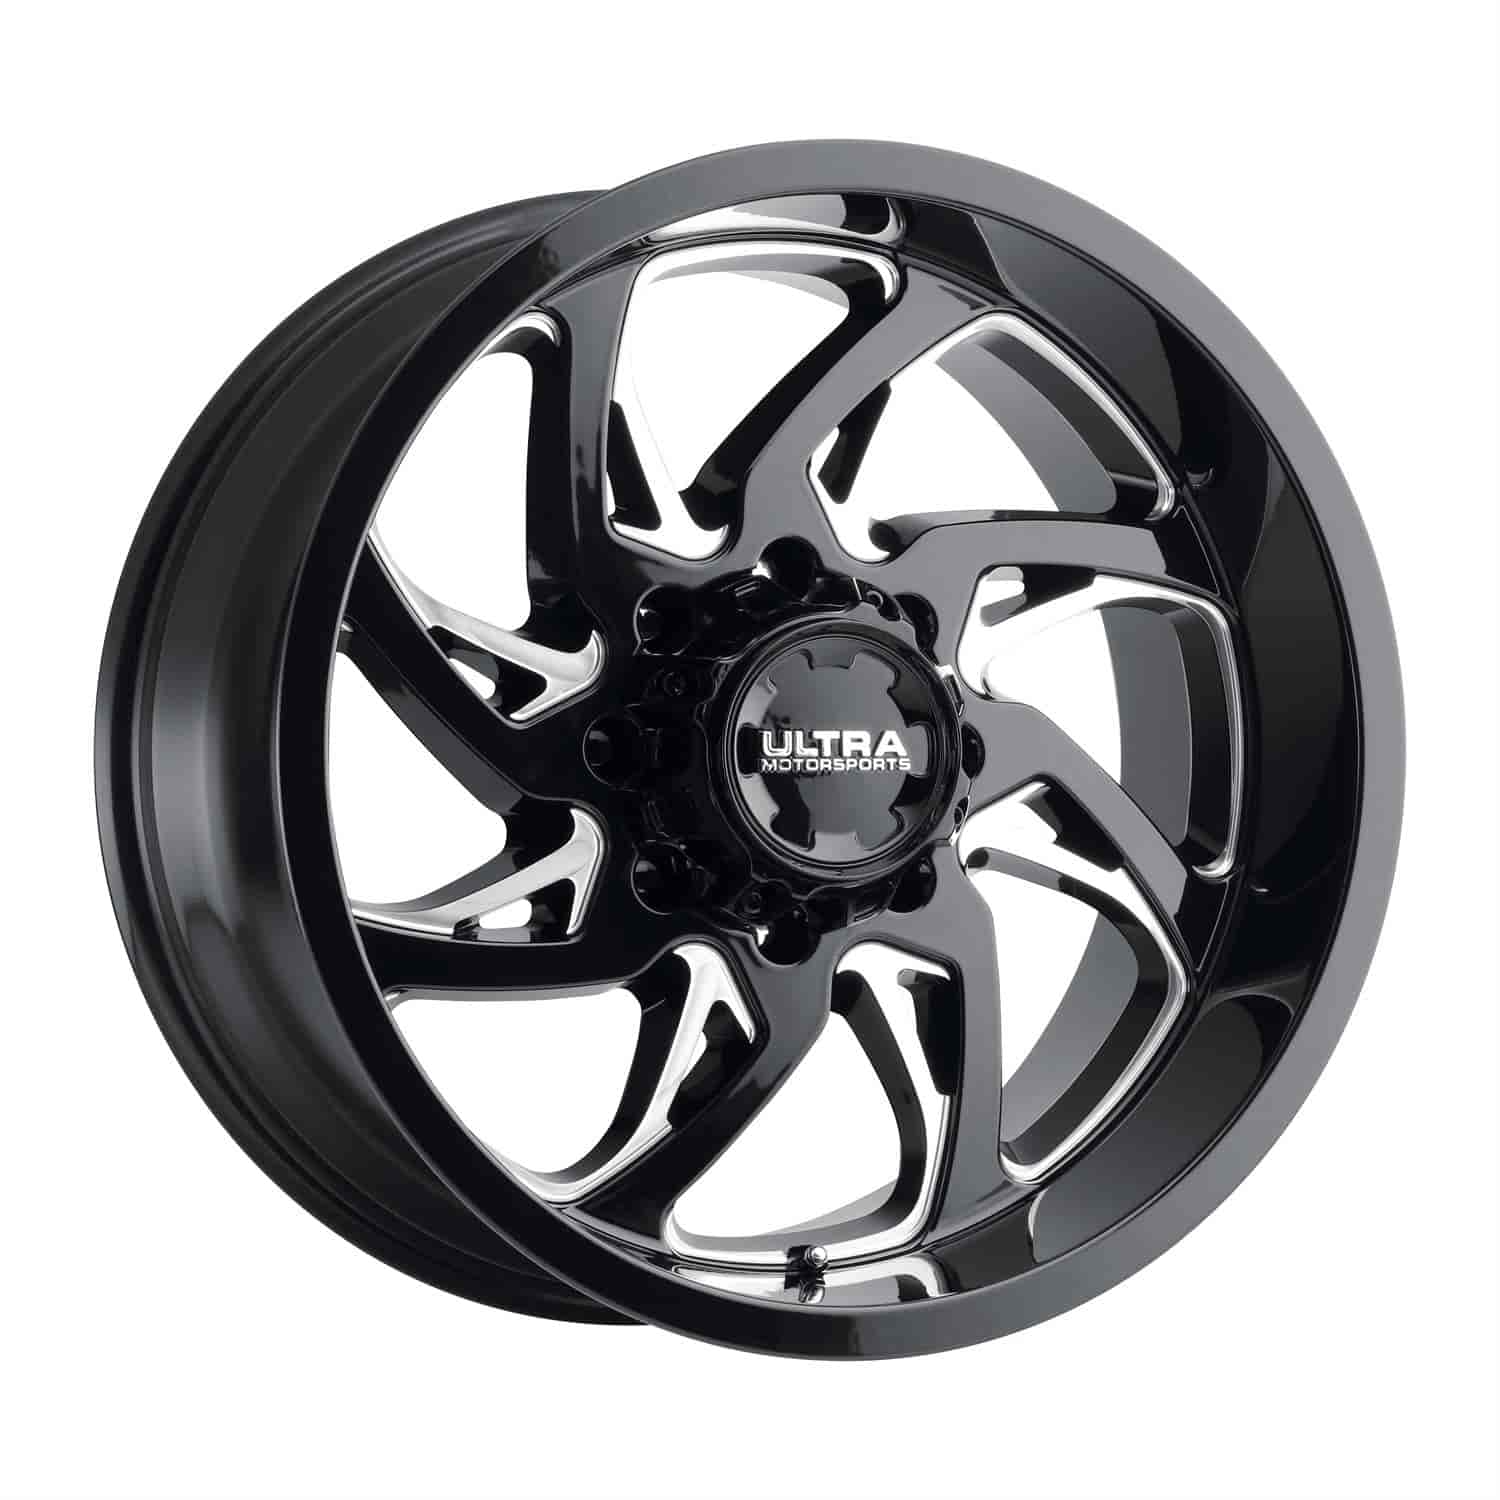 230-Series Villain Wheel, Size: 20x10", Bolt Pattern: 8x180 mm [Gloss Black w/Milled Accents]